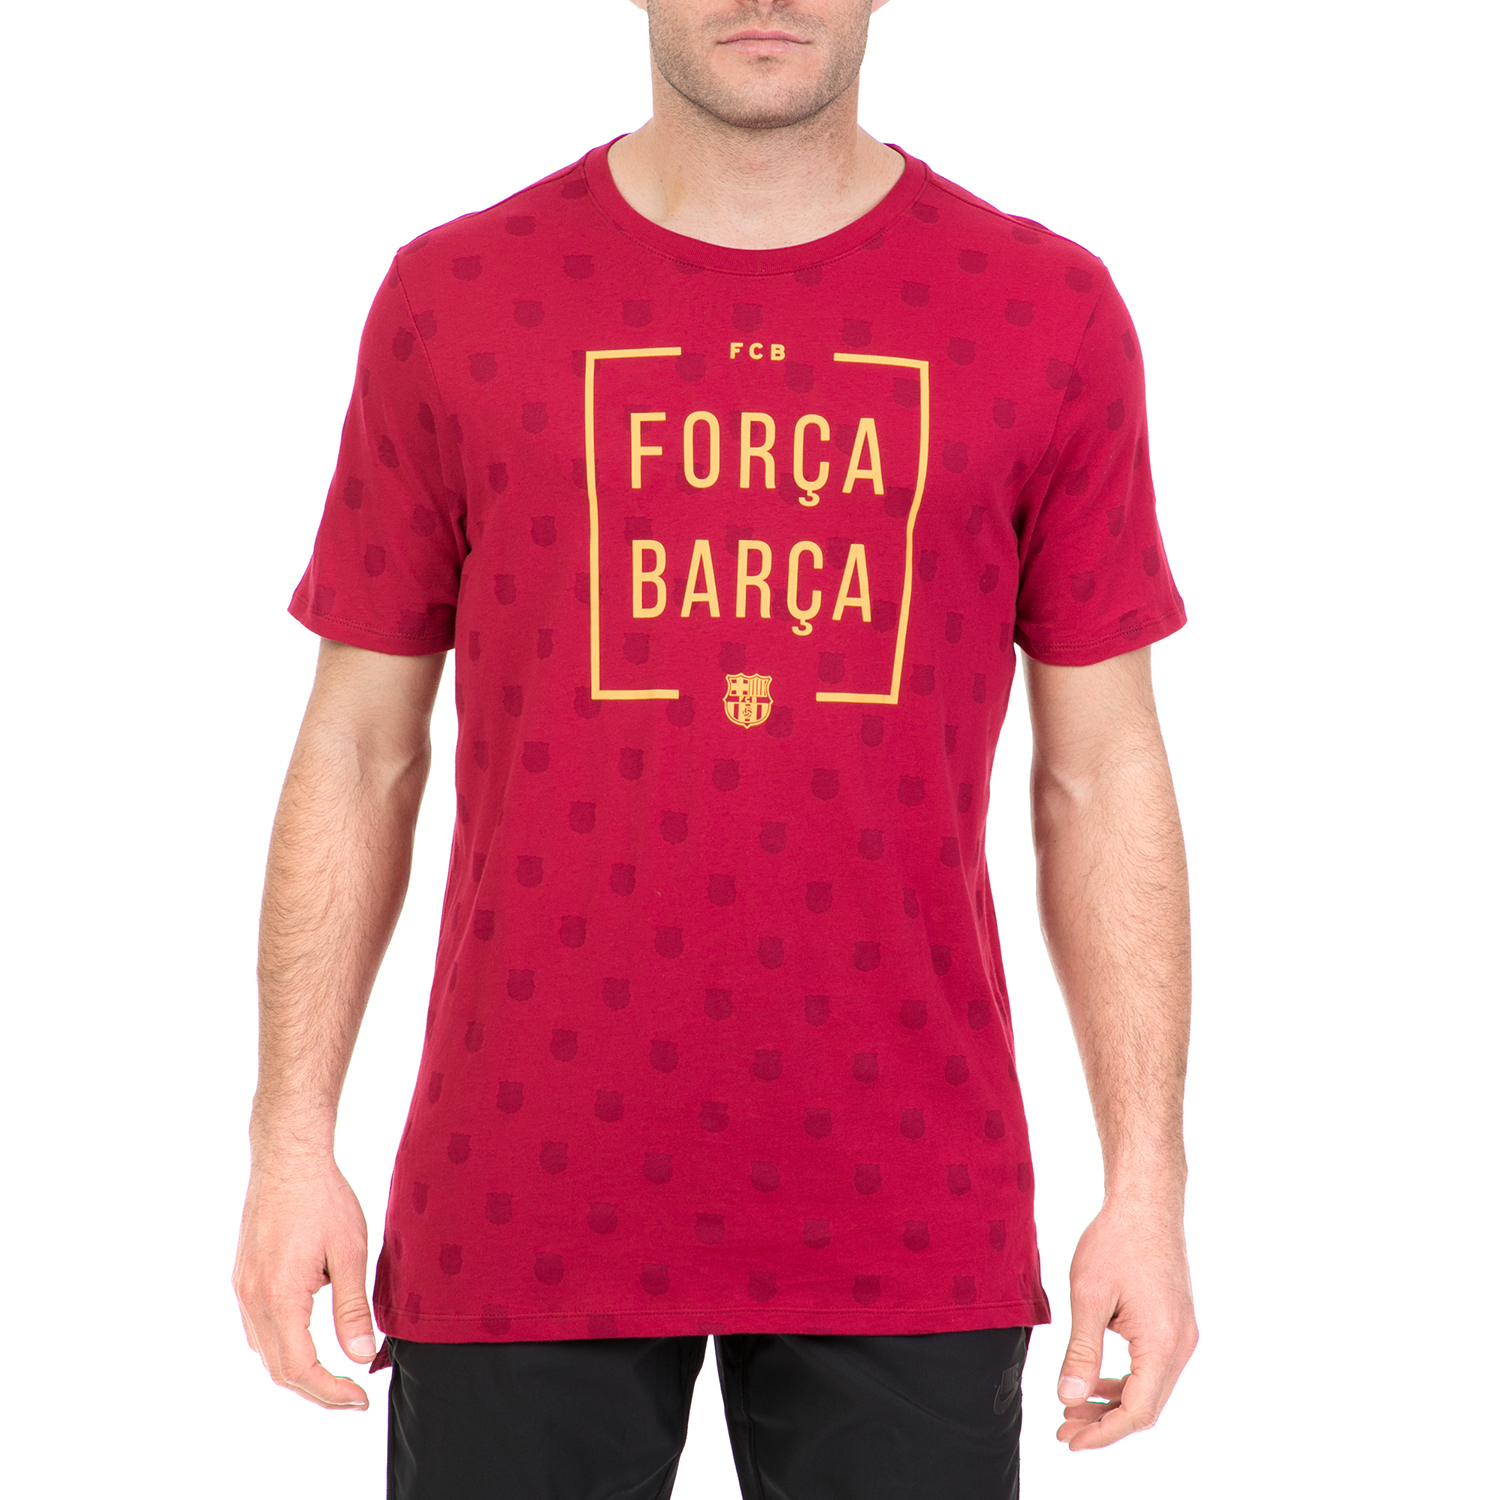 NIKE - Ανδρικό t-shirt Nike FC Barcelona κόκκινο Ανδρικά/Ρούχα/Αθλητικά/T-shirt